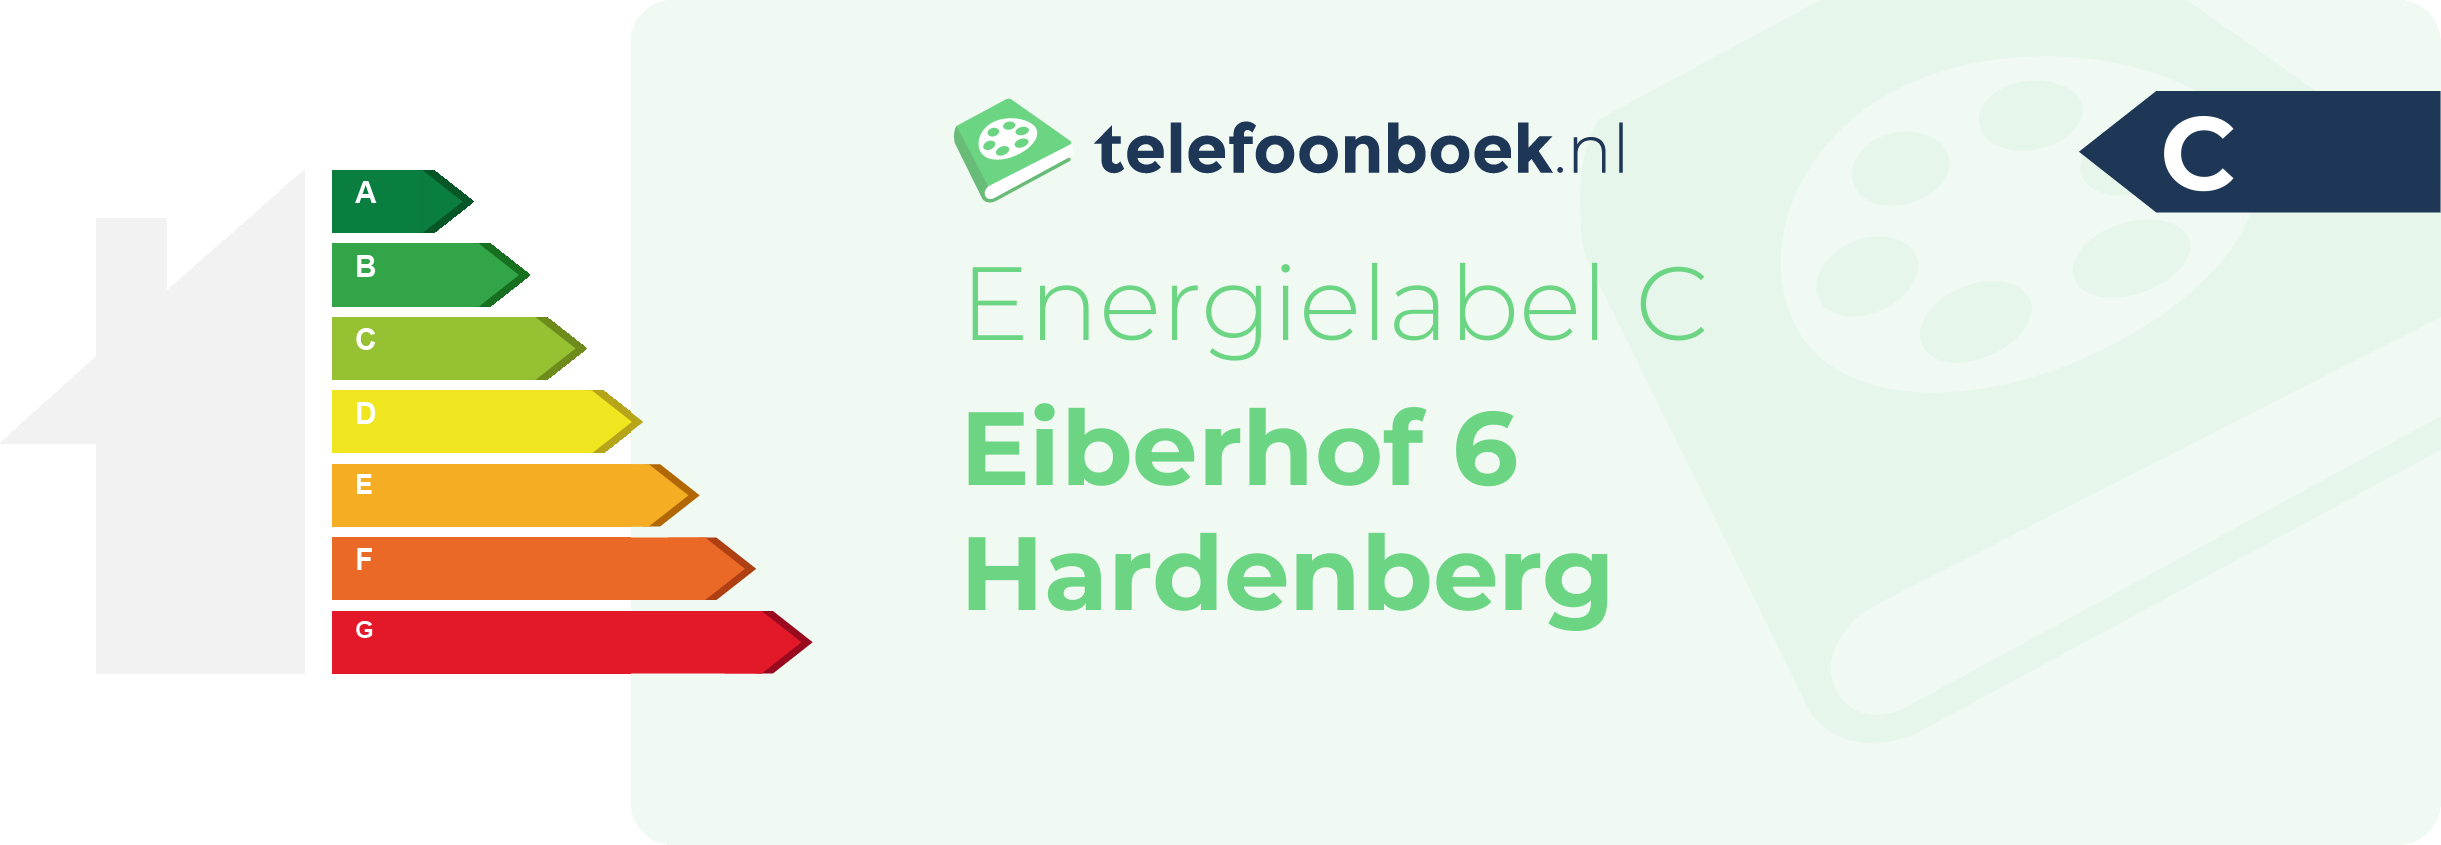 Energielabel Eiberhof 6 Hardenberg